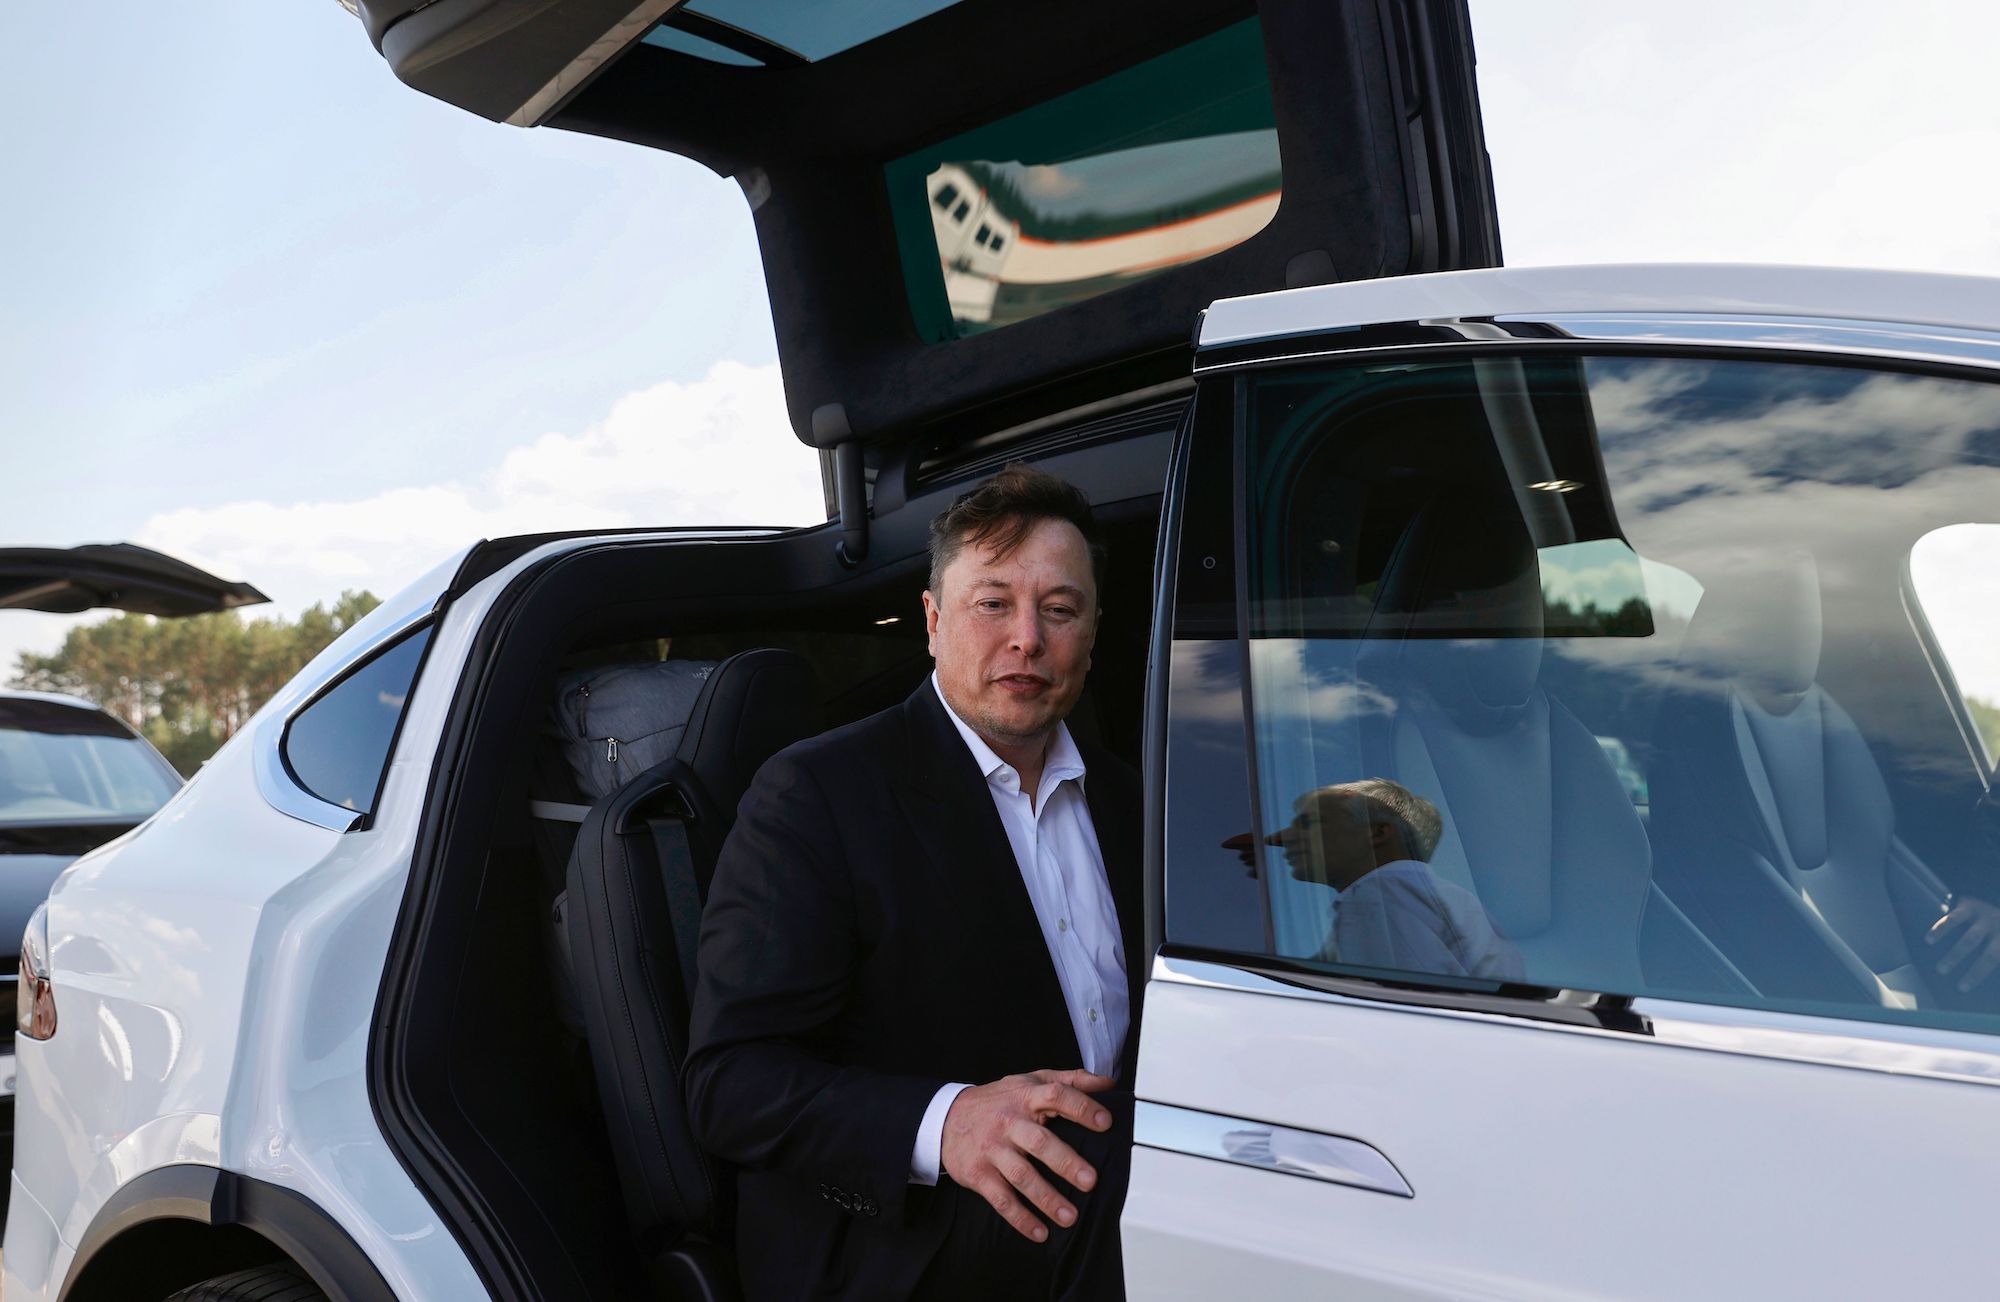 Tesla CEO Elon Musk gets into a white Tesla Model X SUV after talking to media on September 3, 2020, in Gruenheide, Germany